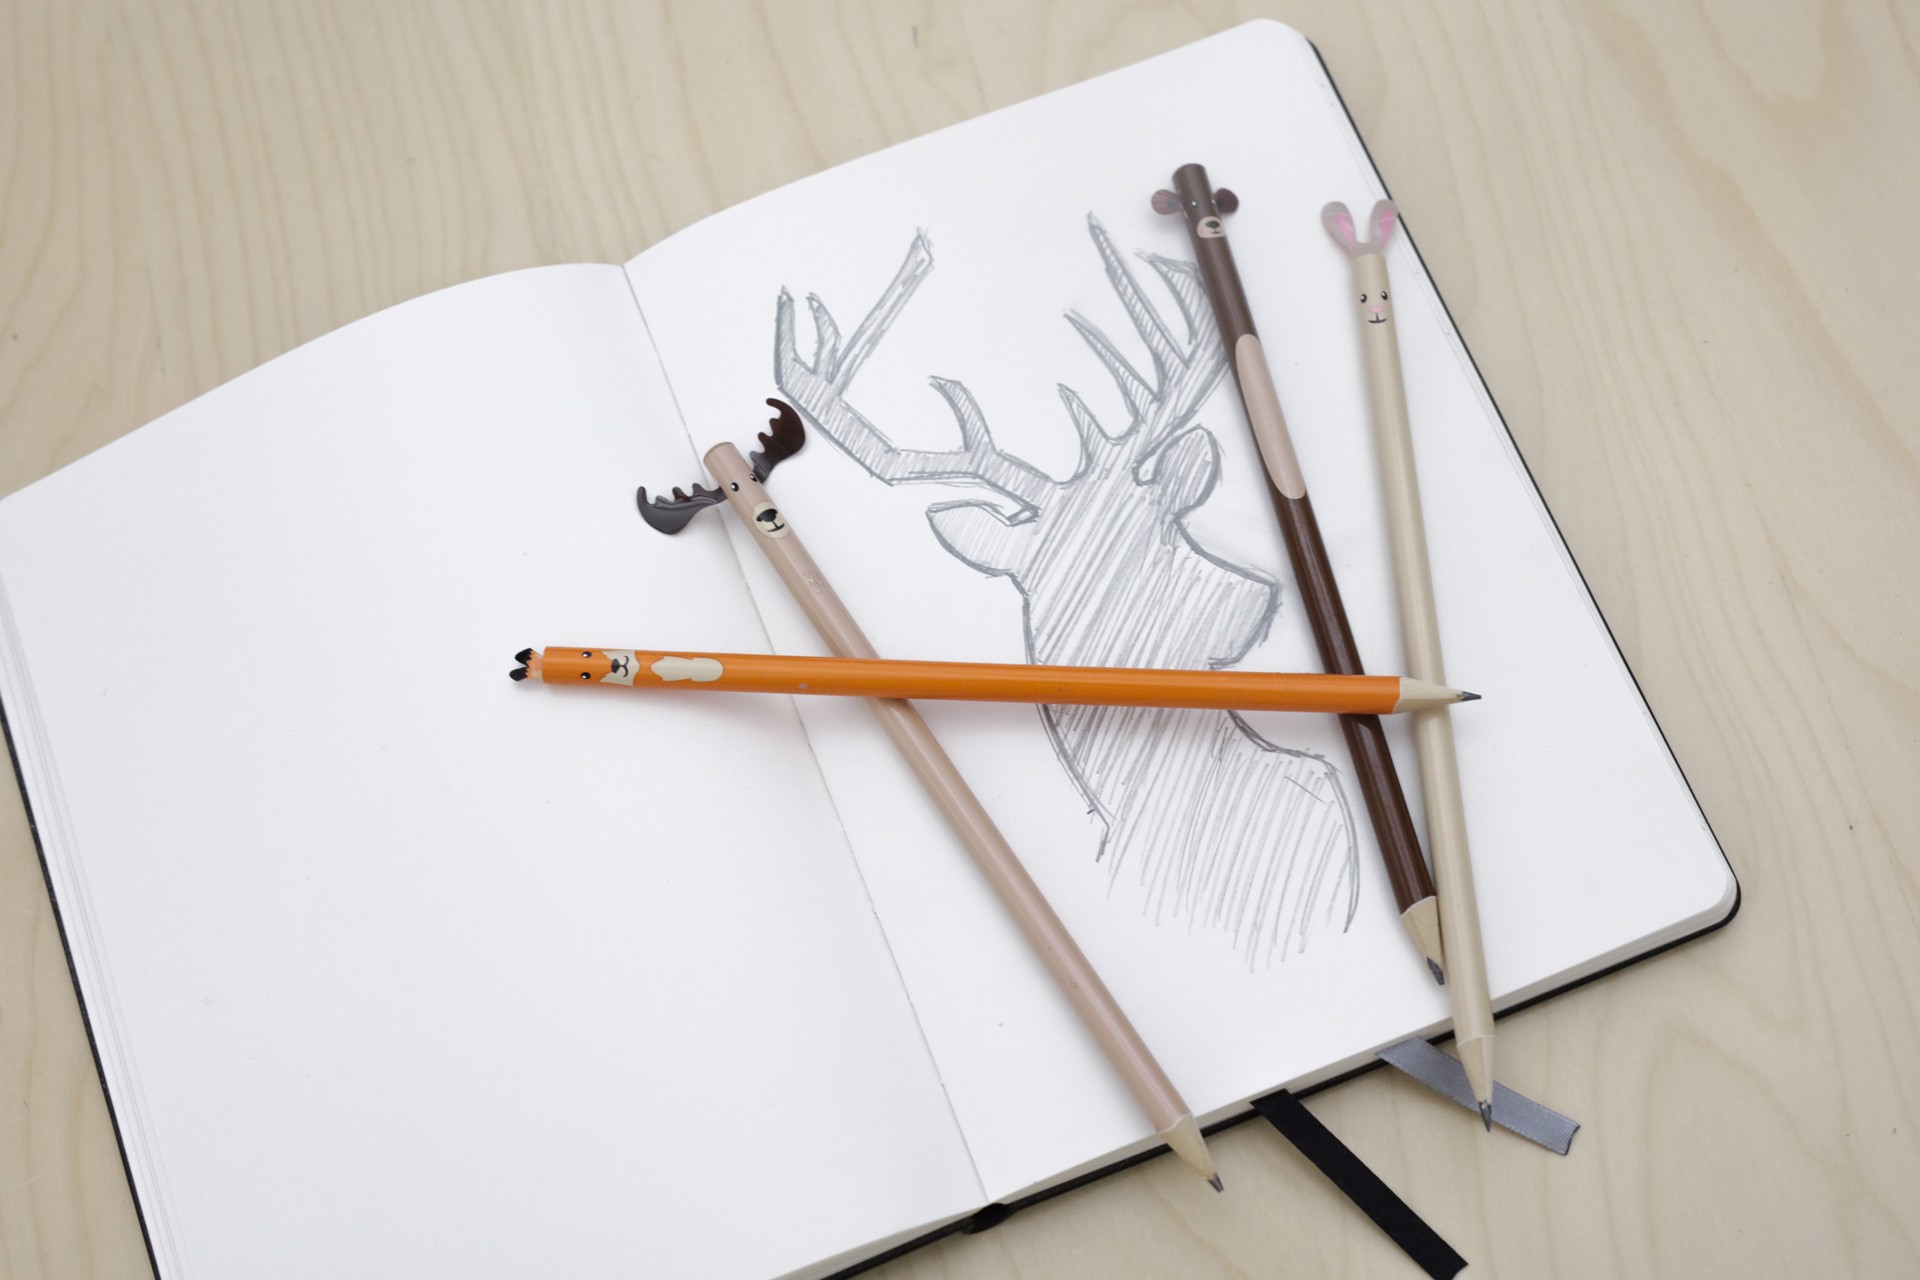 Woodland Pencils by Chauvet Arts